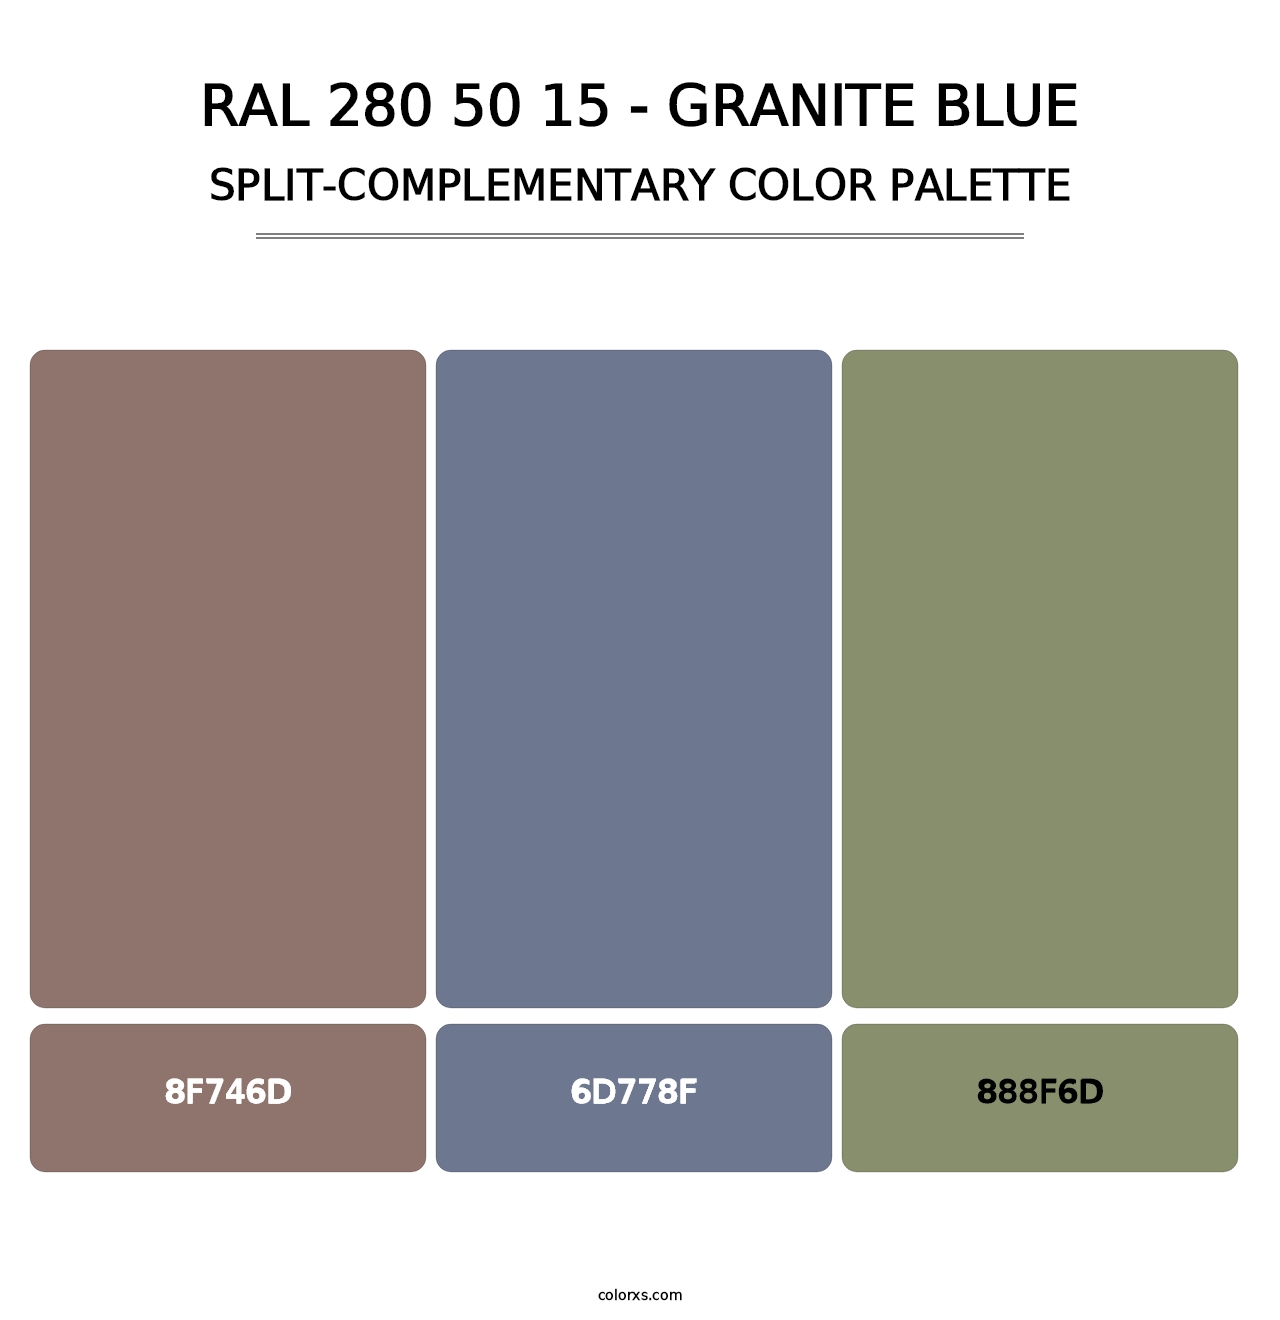 RAL 280 50 15 - Granite Blue - Split-Complementary Color Palette